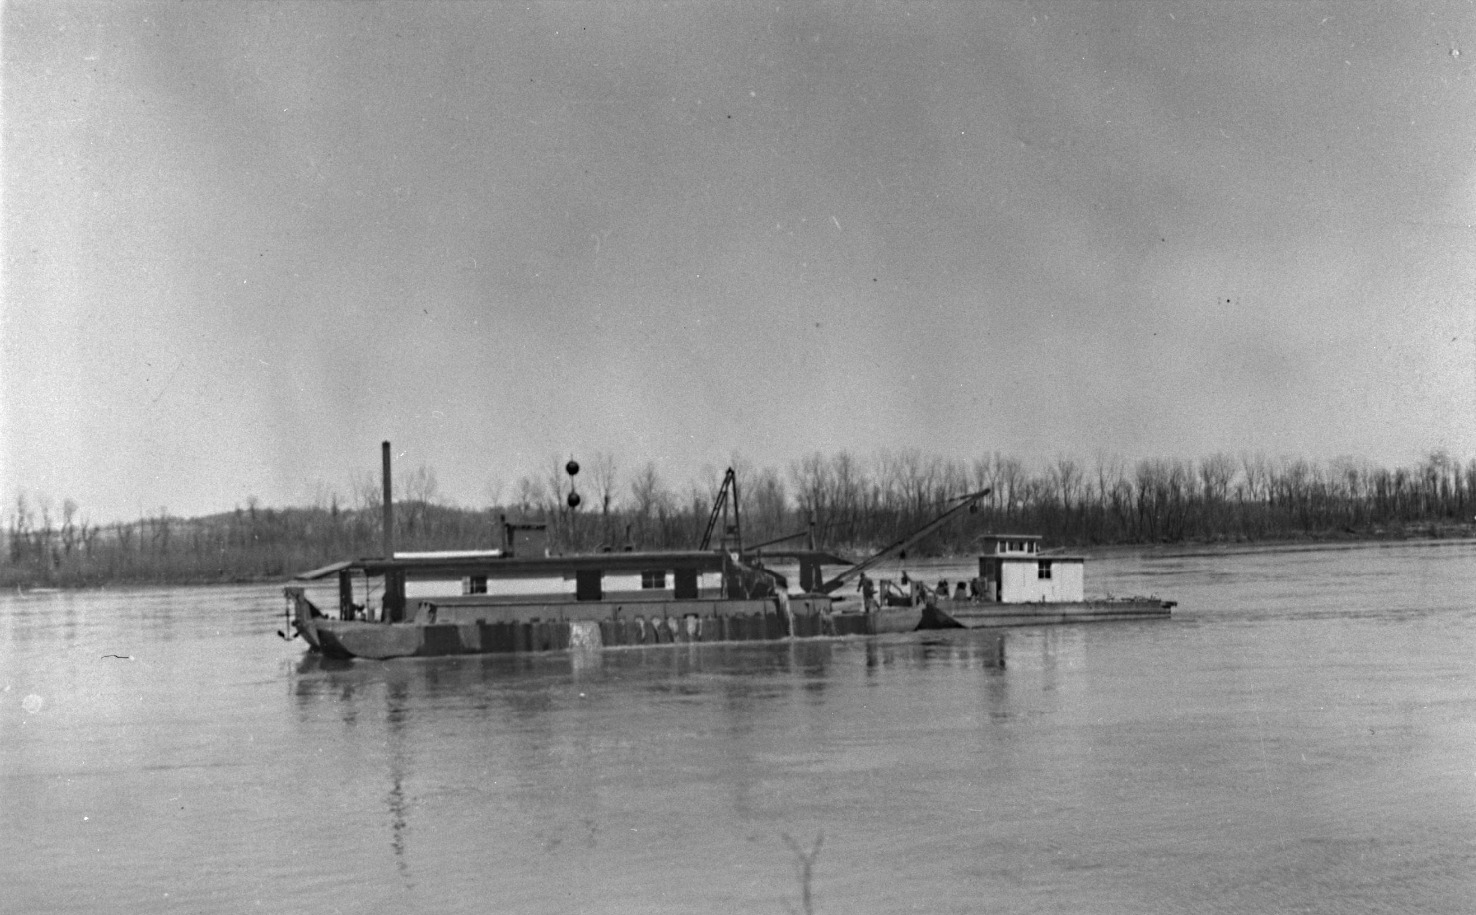 steamer Henry J. Wallau & dredge boat